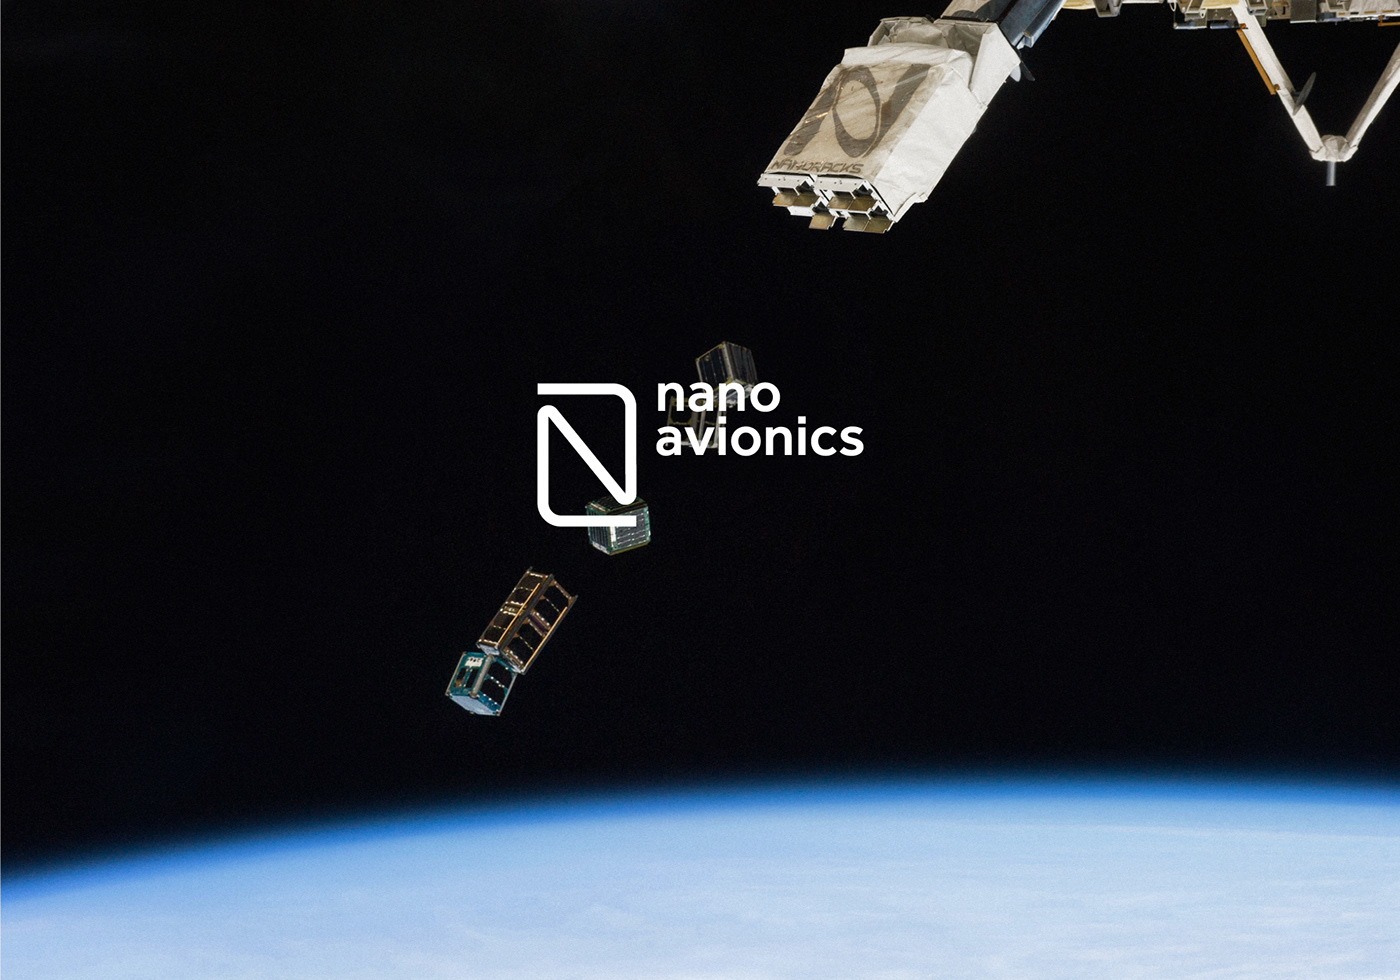 Nano Avionics / Spacecraft engineers on Behance